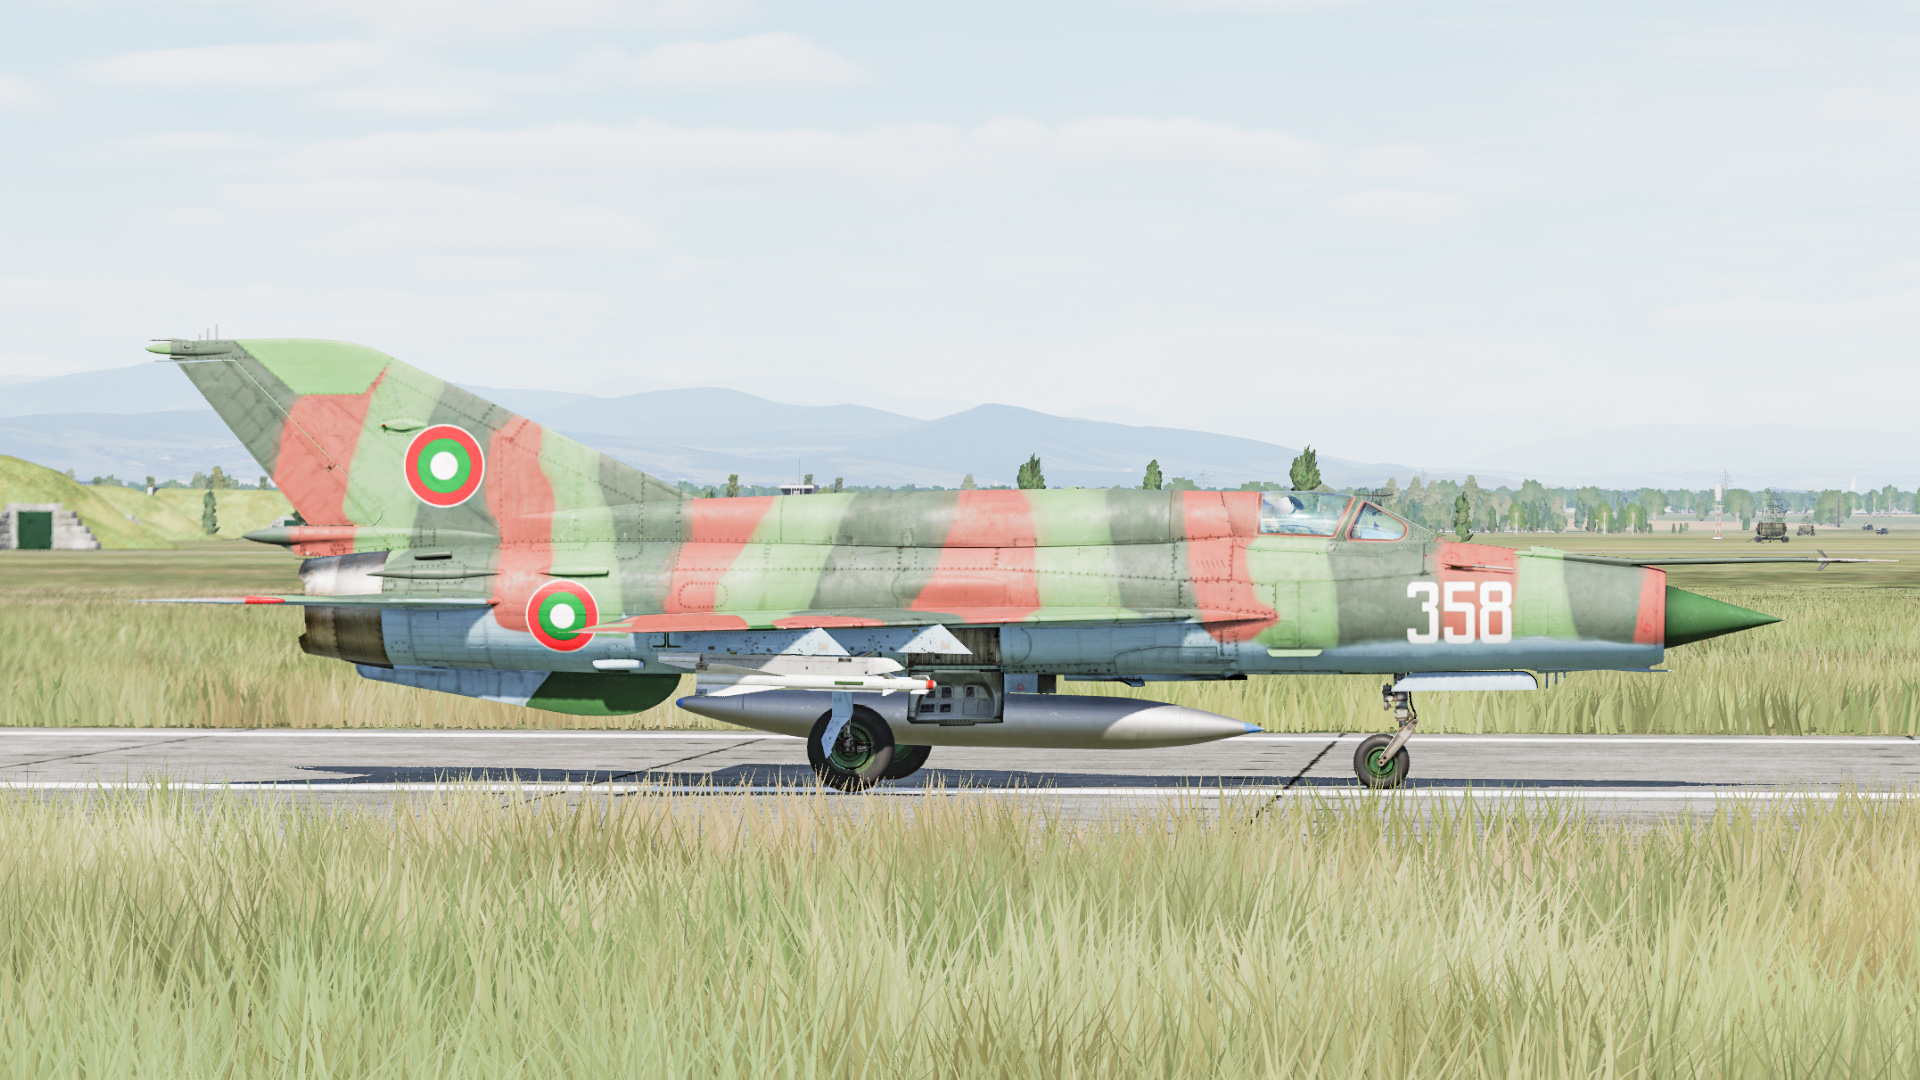 Bulgarian Air Force 358